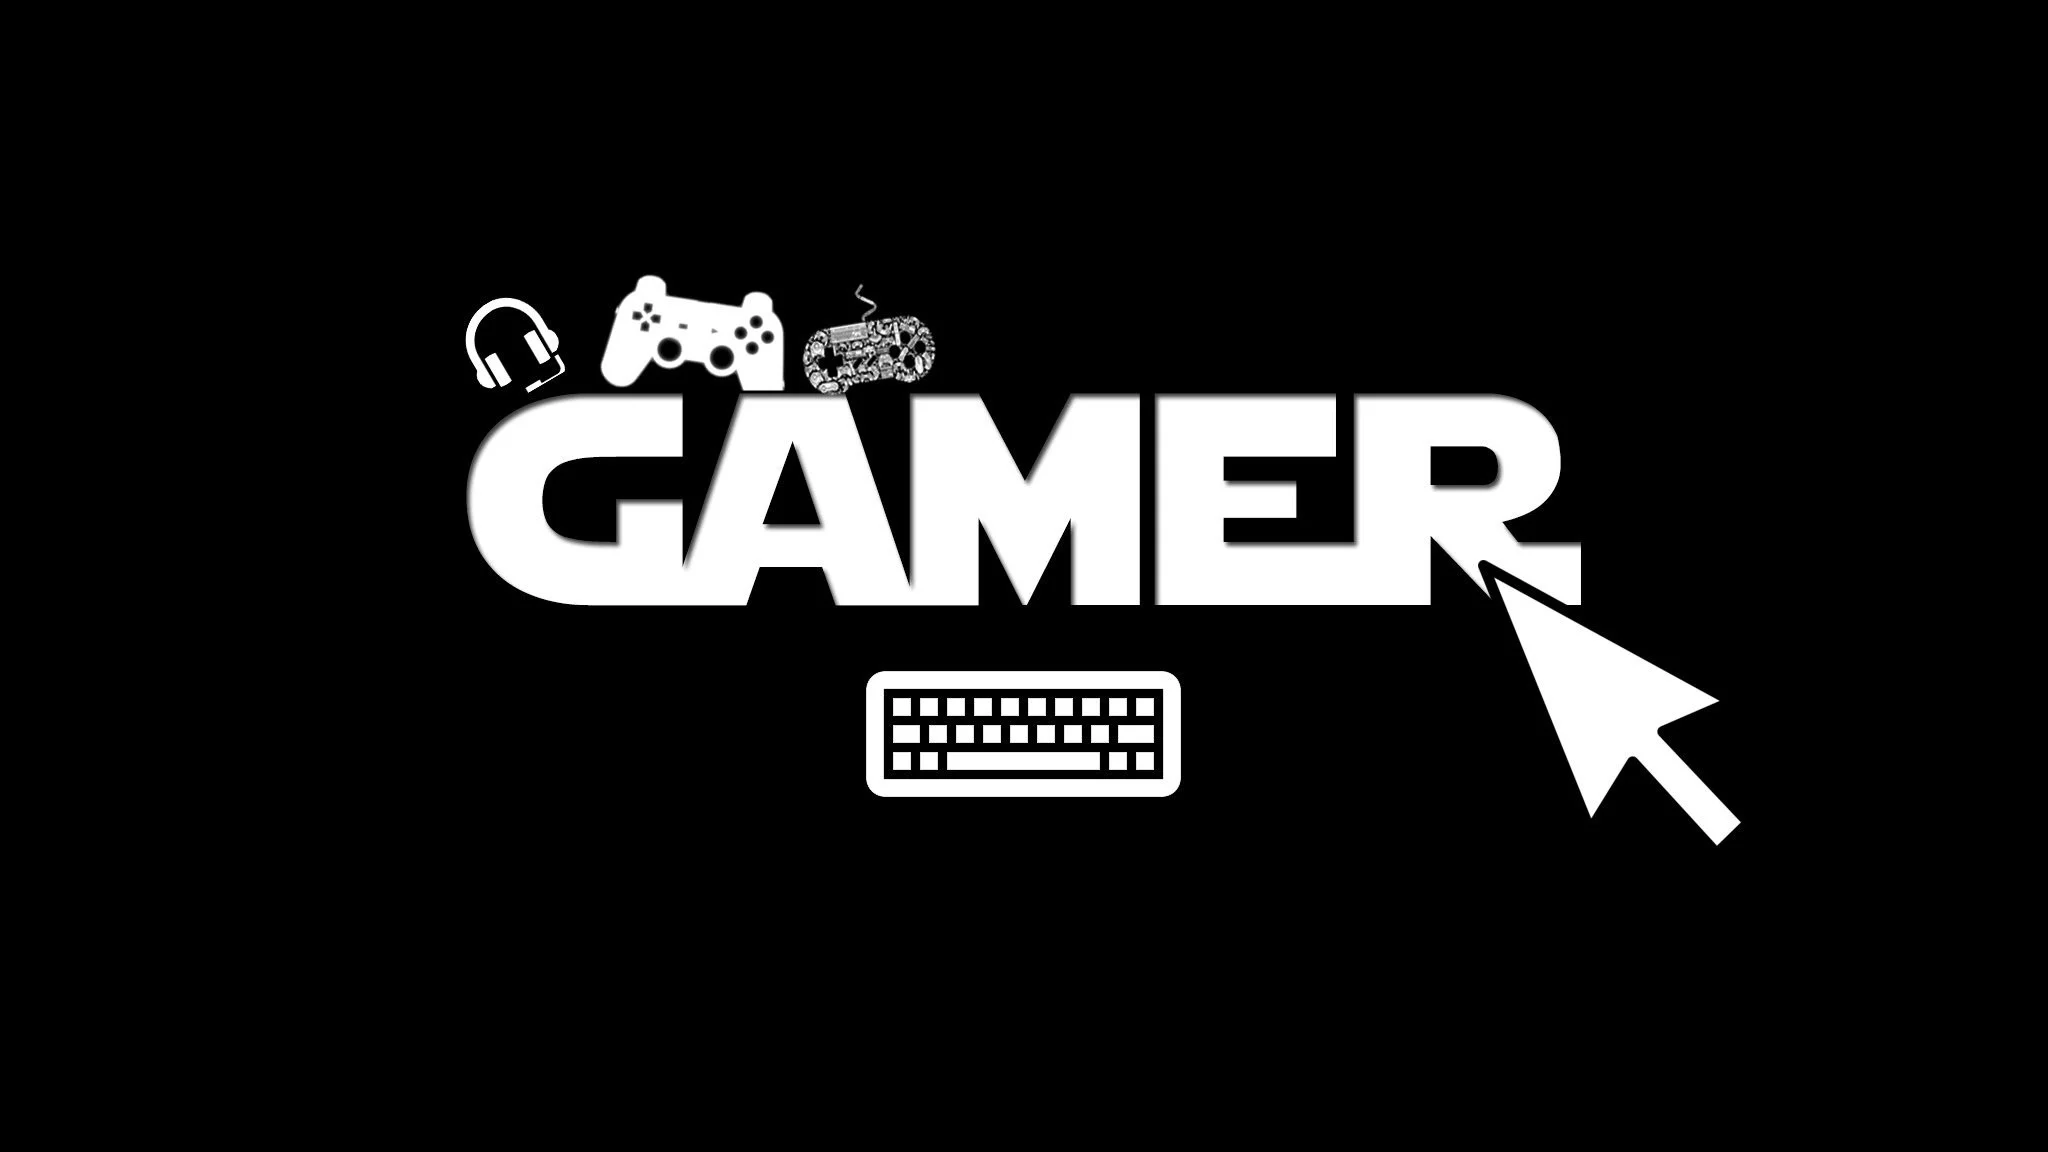 gamer wallpaper 33169 | Games | Pinterest | Wallpaper, Gaming and Gaming  wallpapers